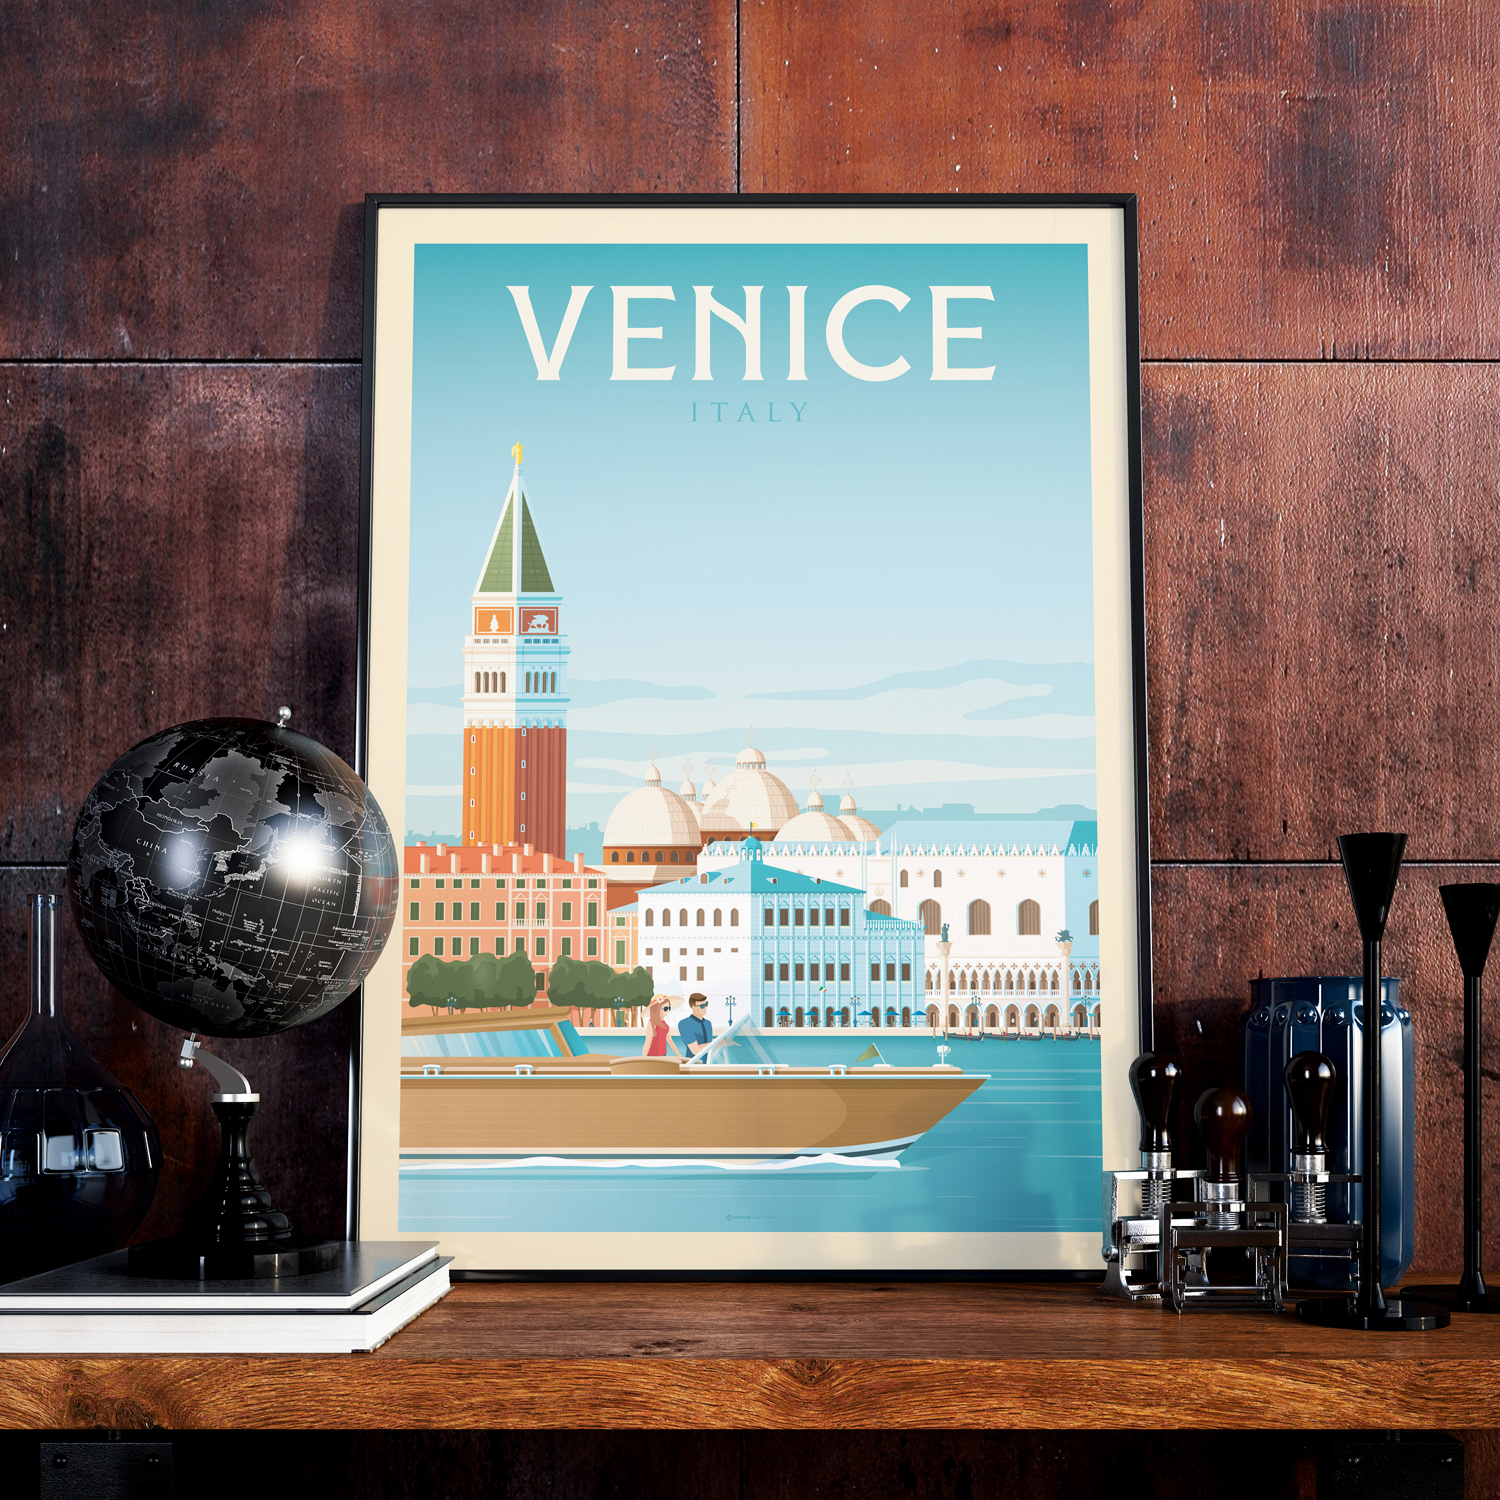 Venice Italy Di on Travel Illustration by Retro Poster Dribbble Beutierio Francesco